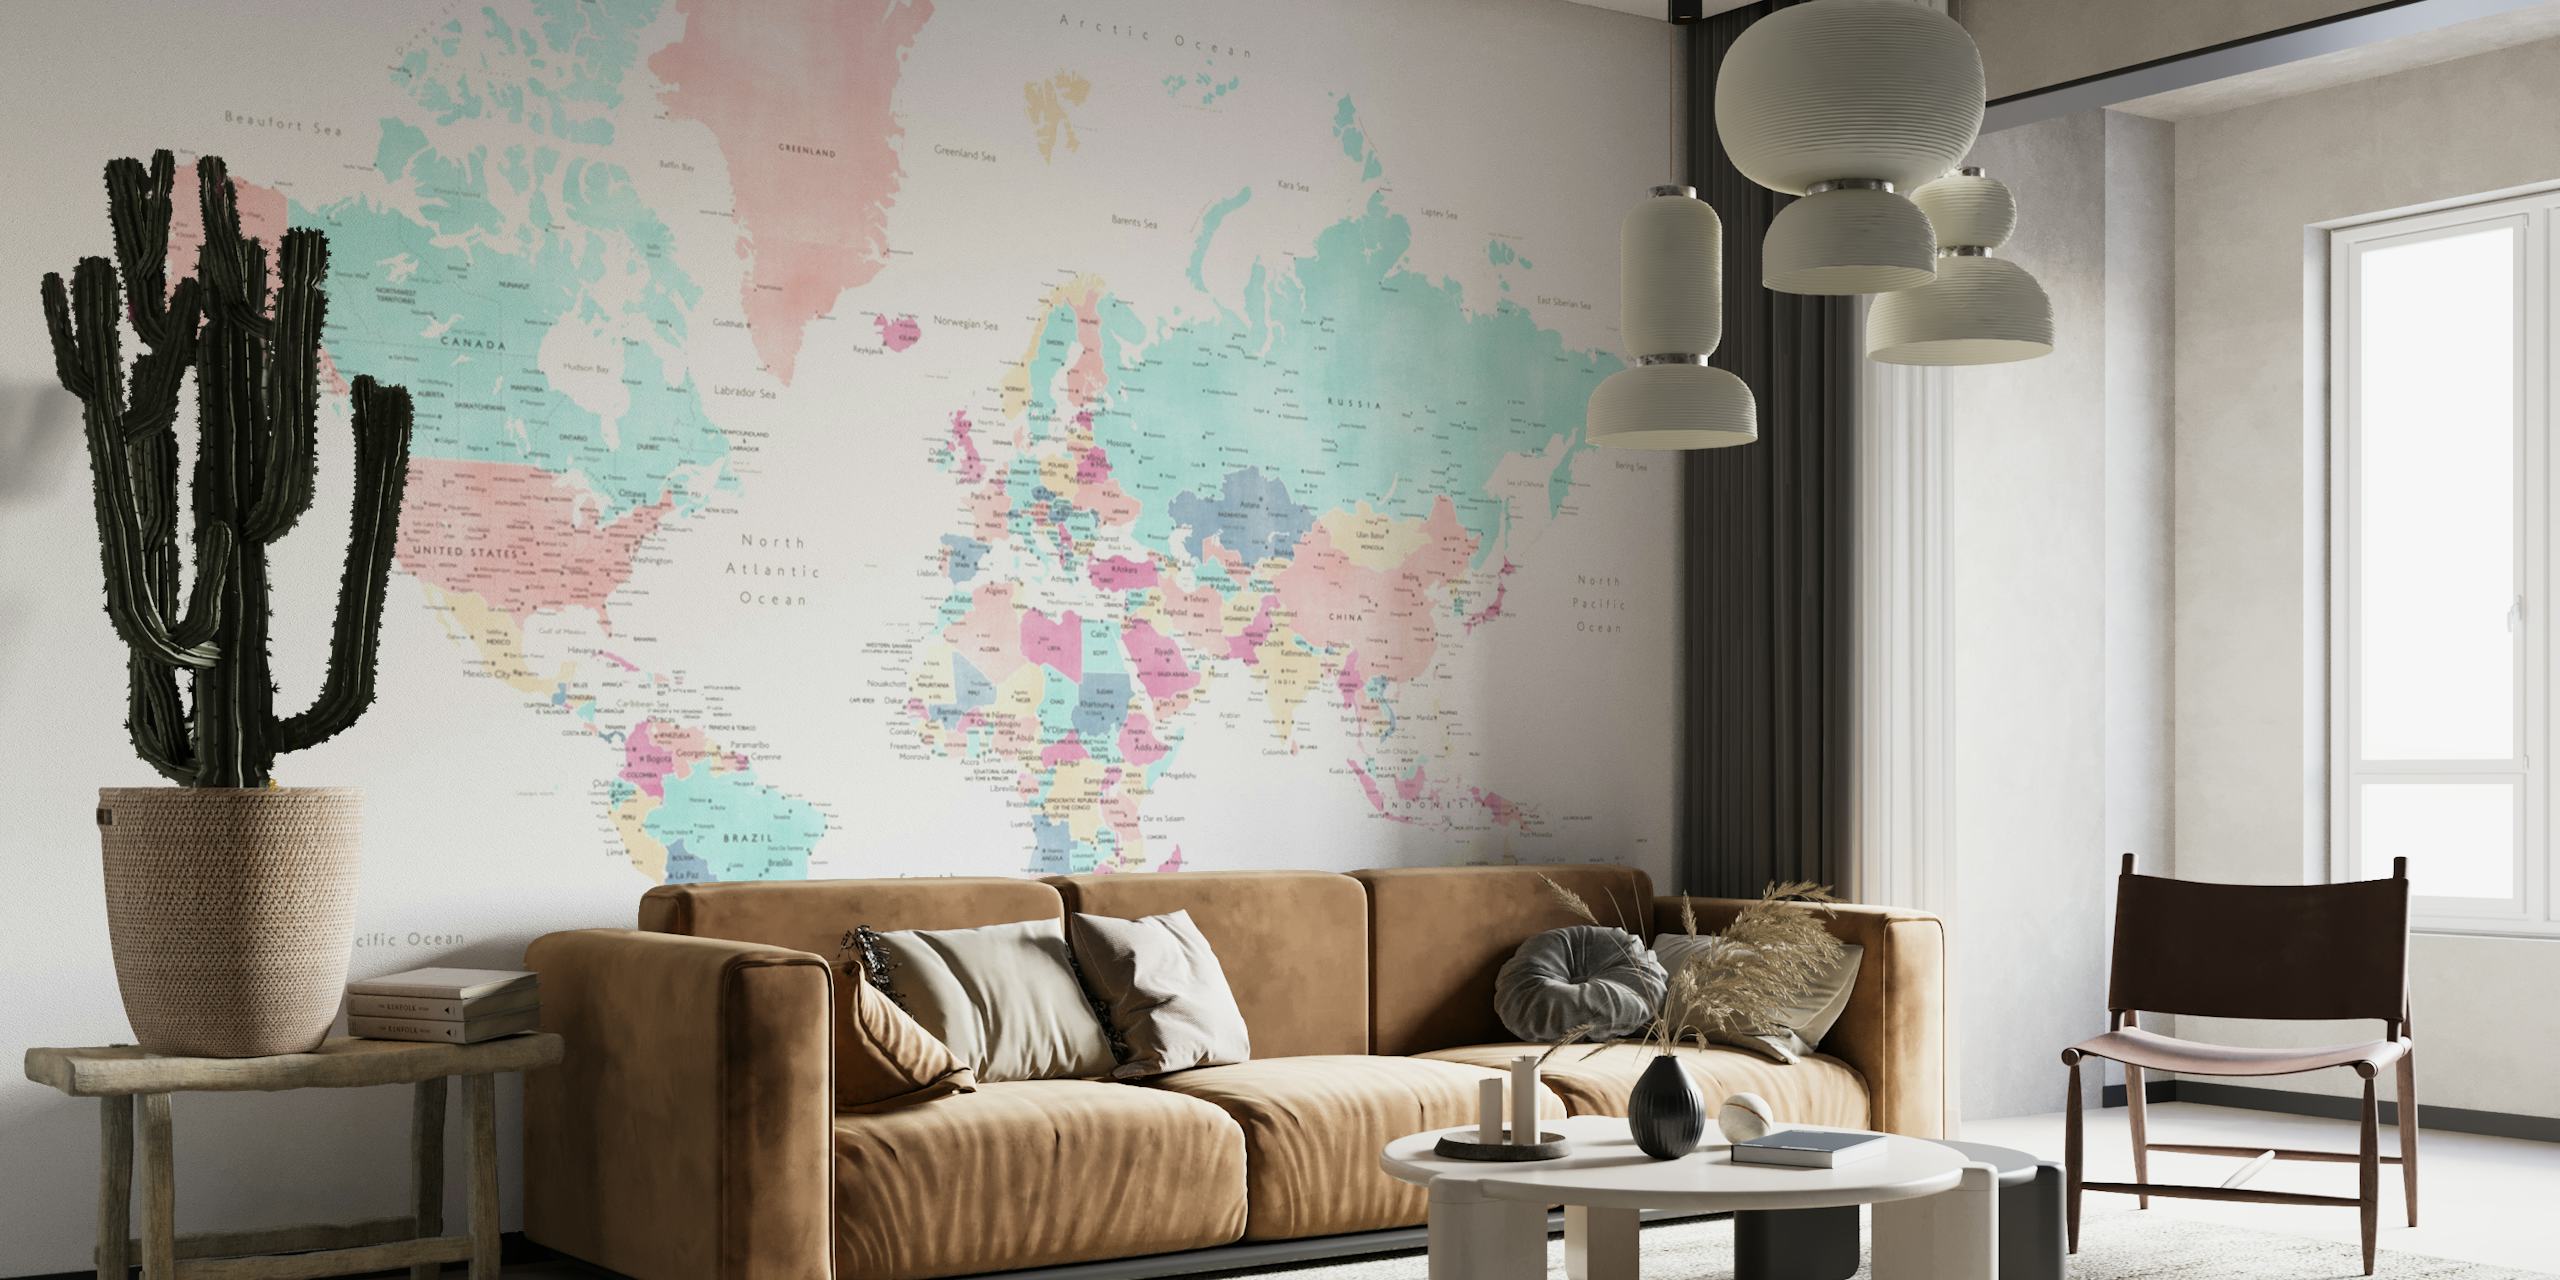 World map with cities Carmen papel pintado